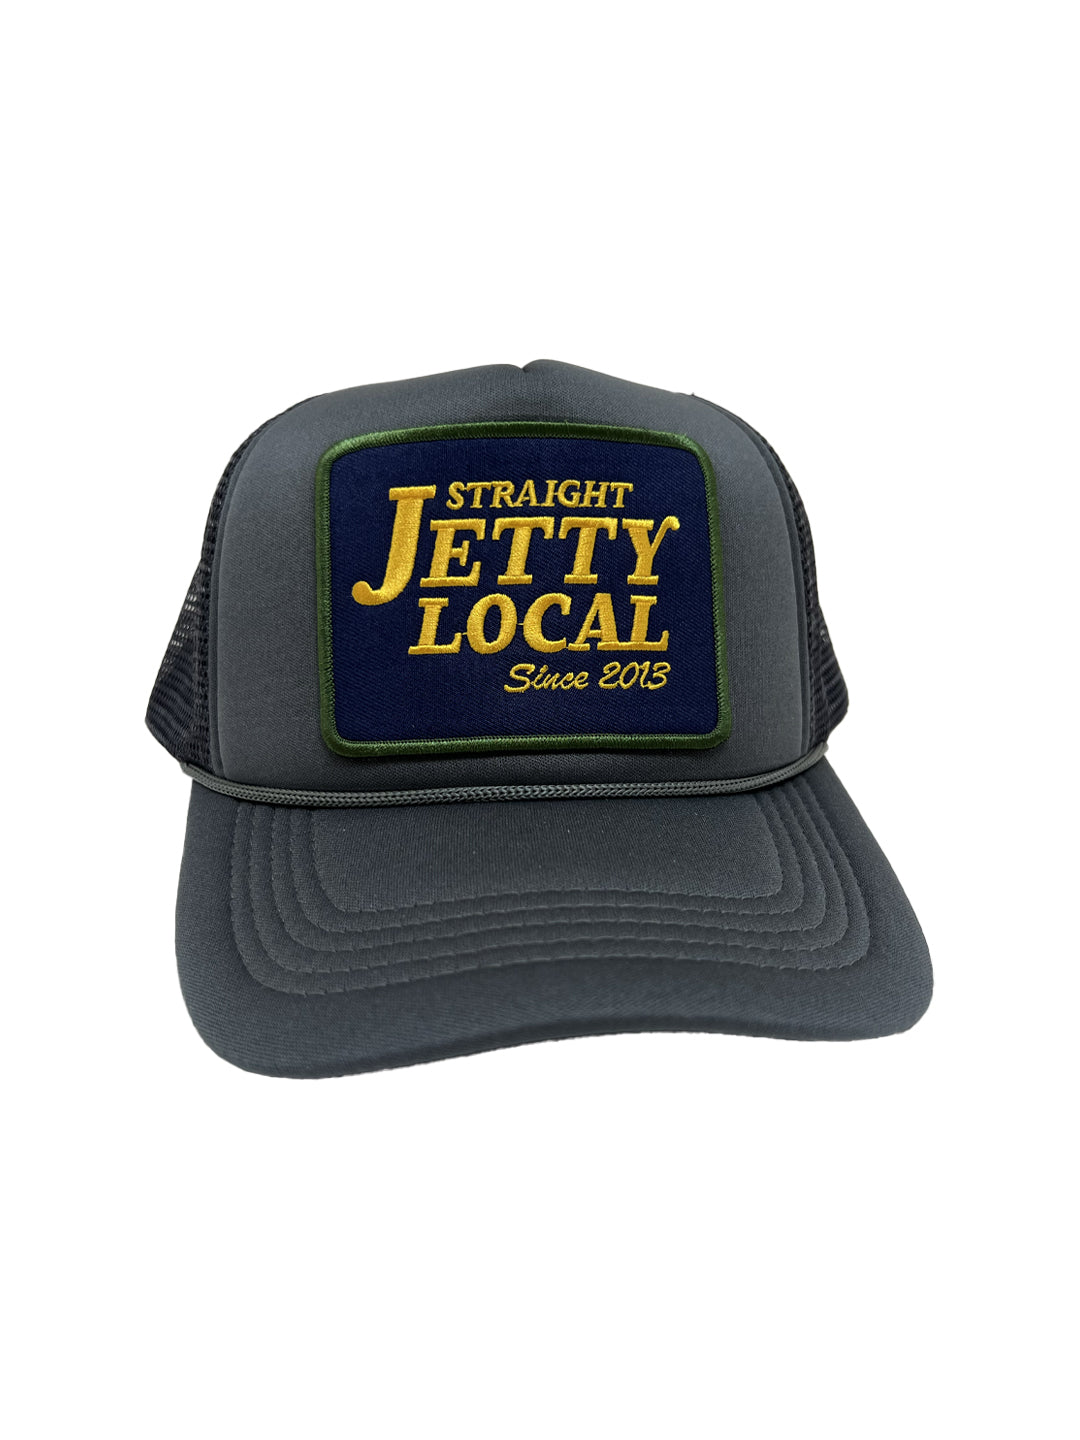 Jetty Local Trucker Hat